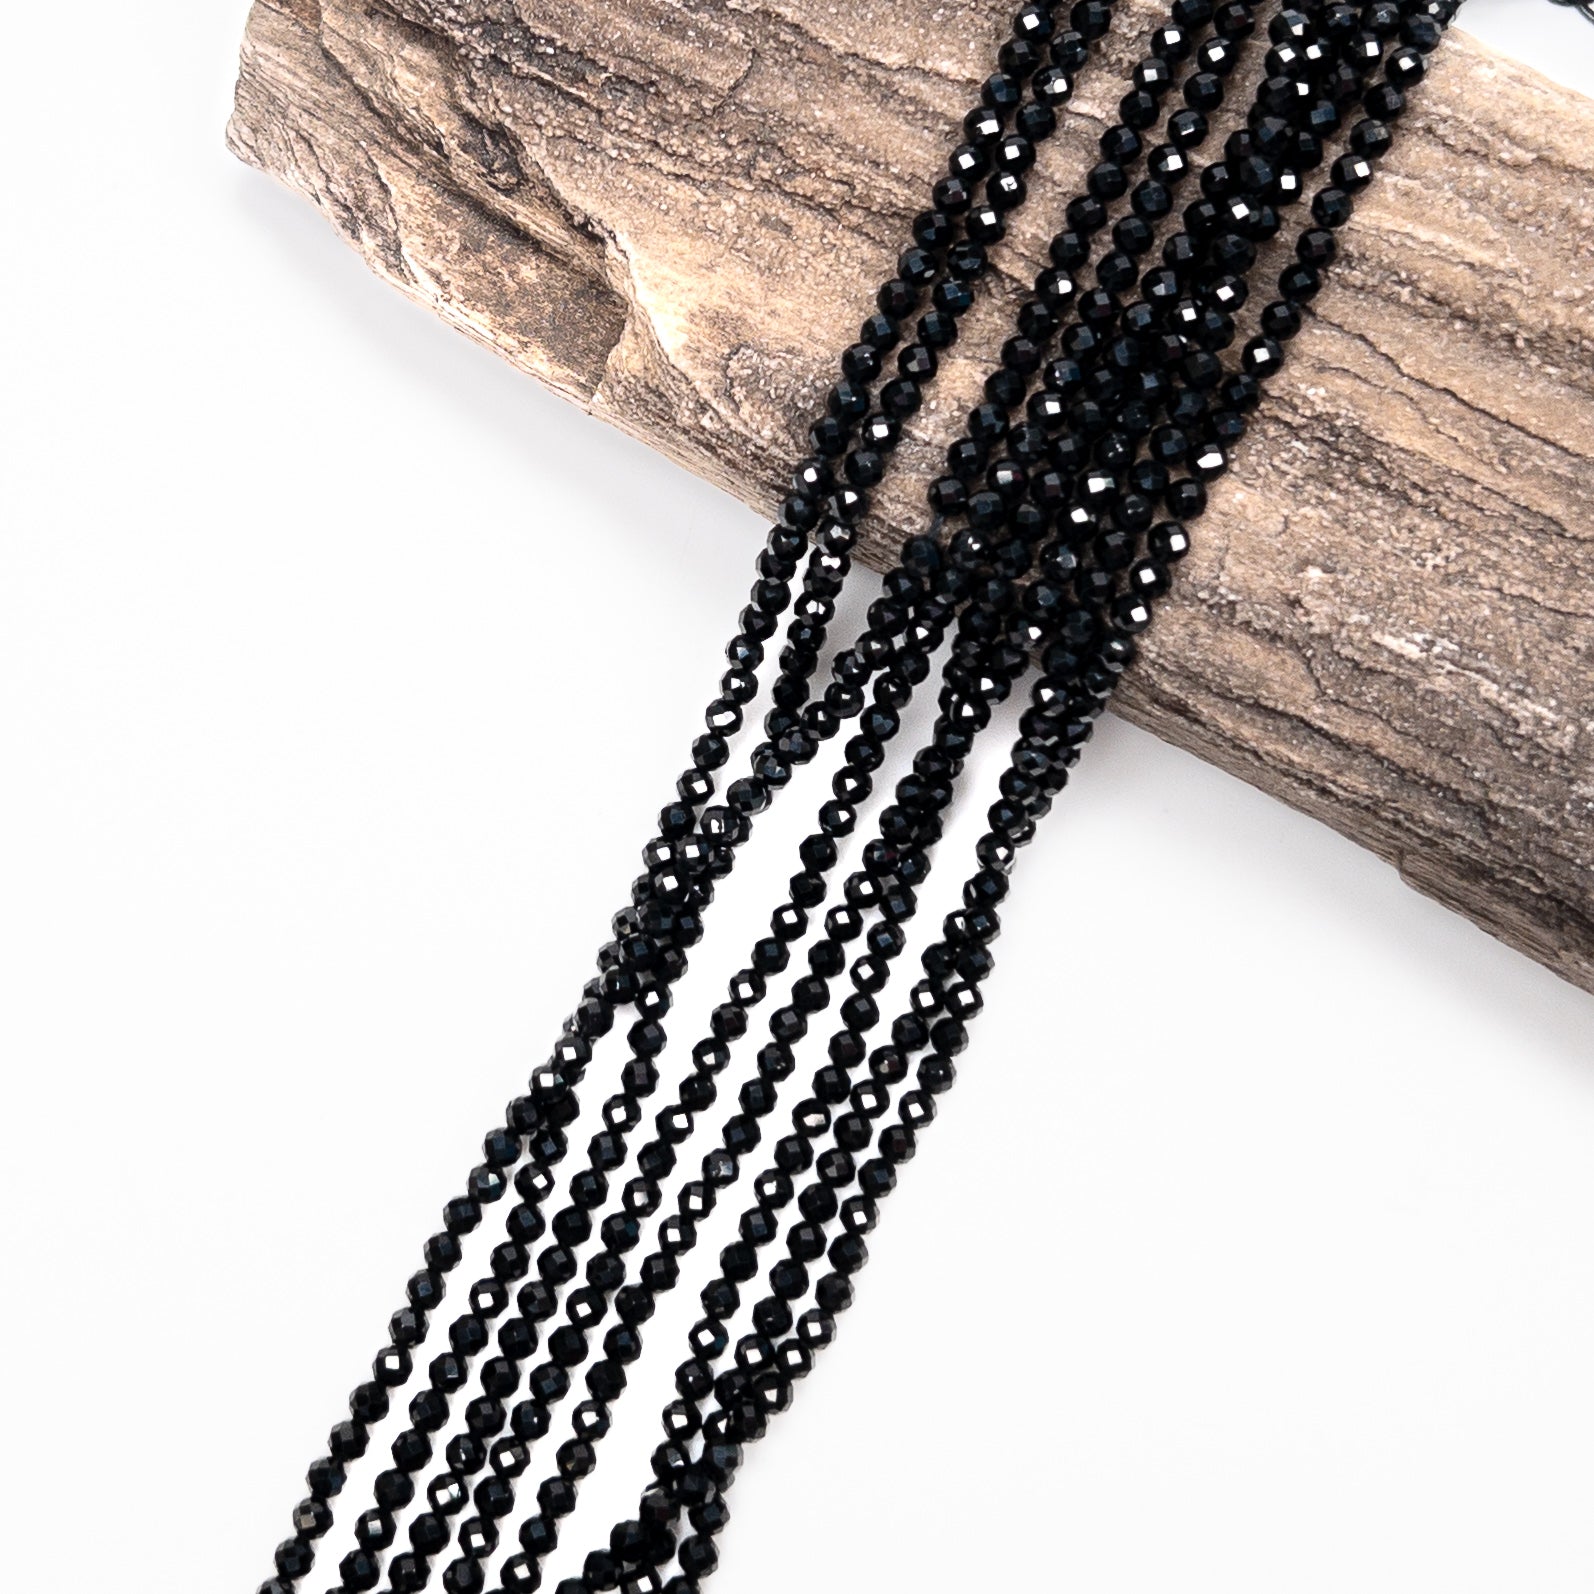 3mm BLACK SPINEL Faceted Gemstone Beads